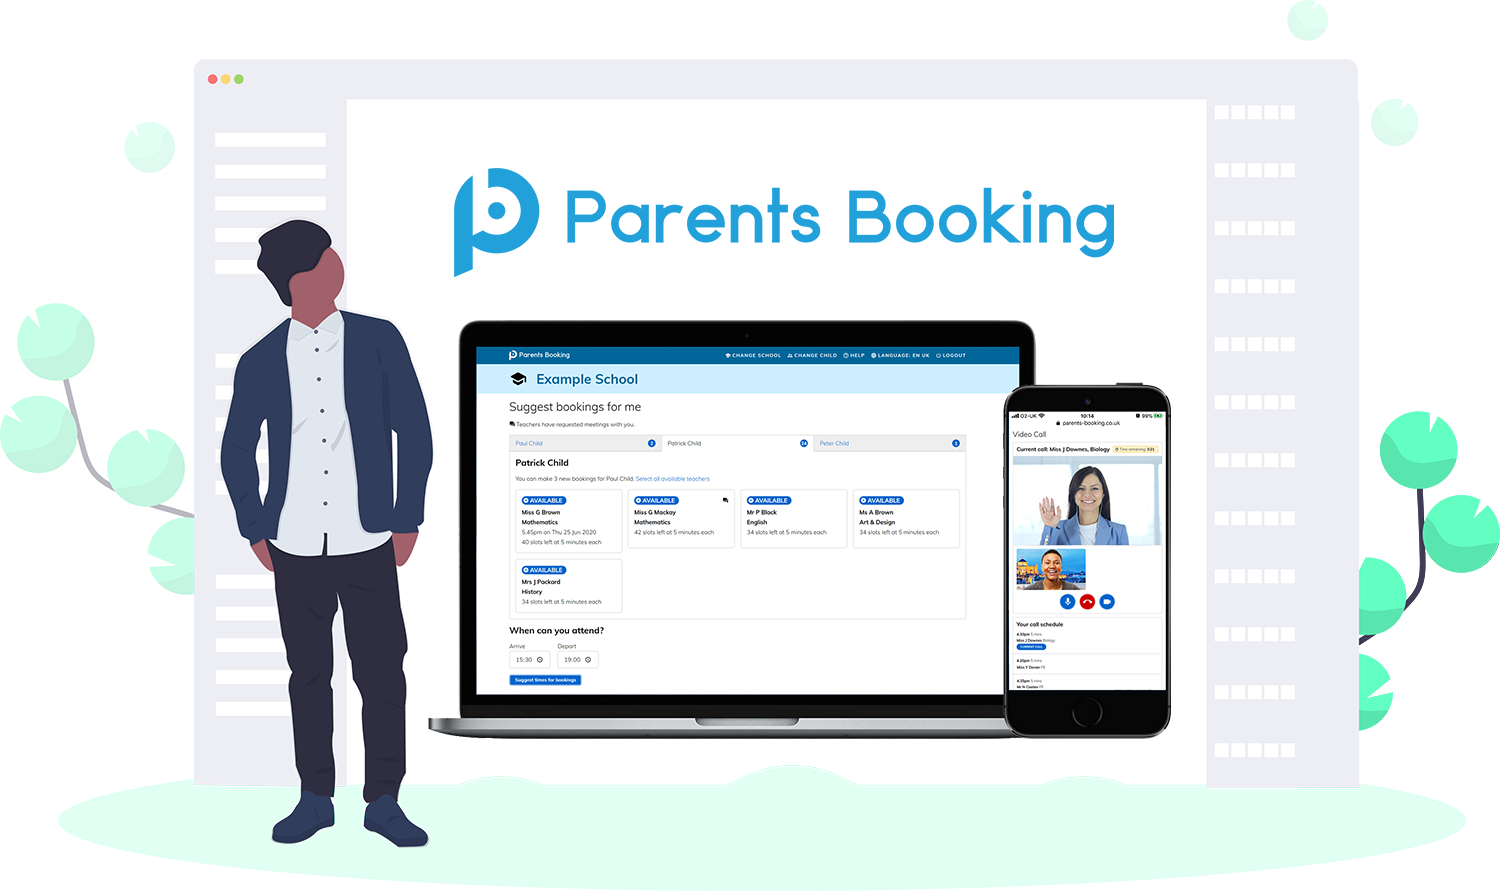 Parents' Booking